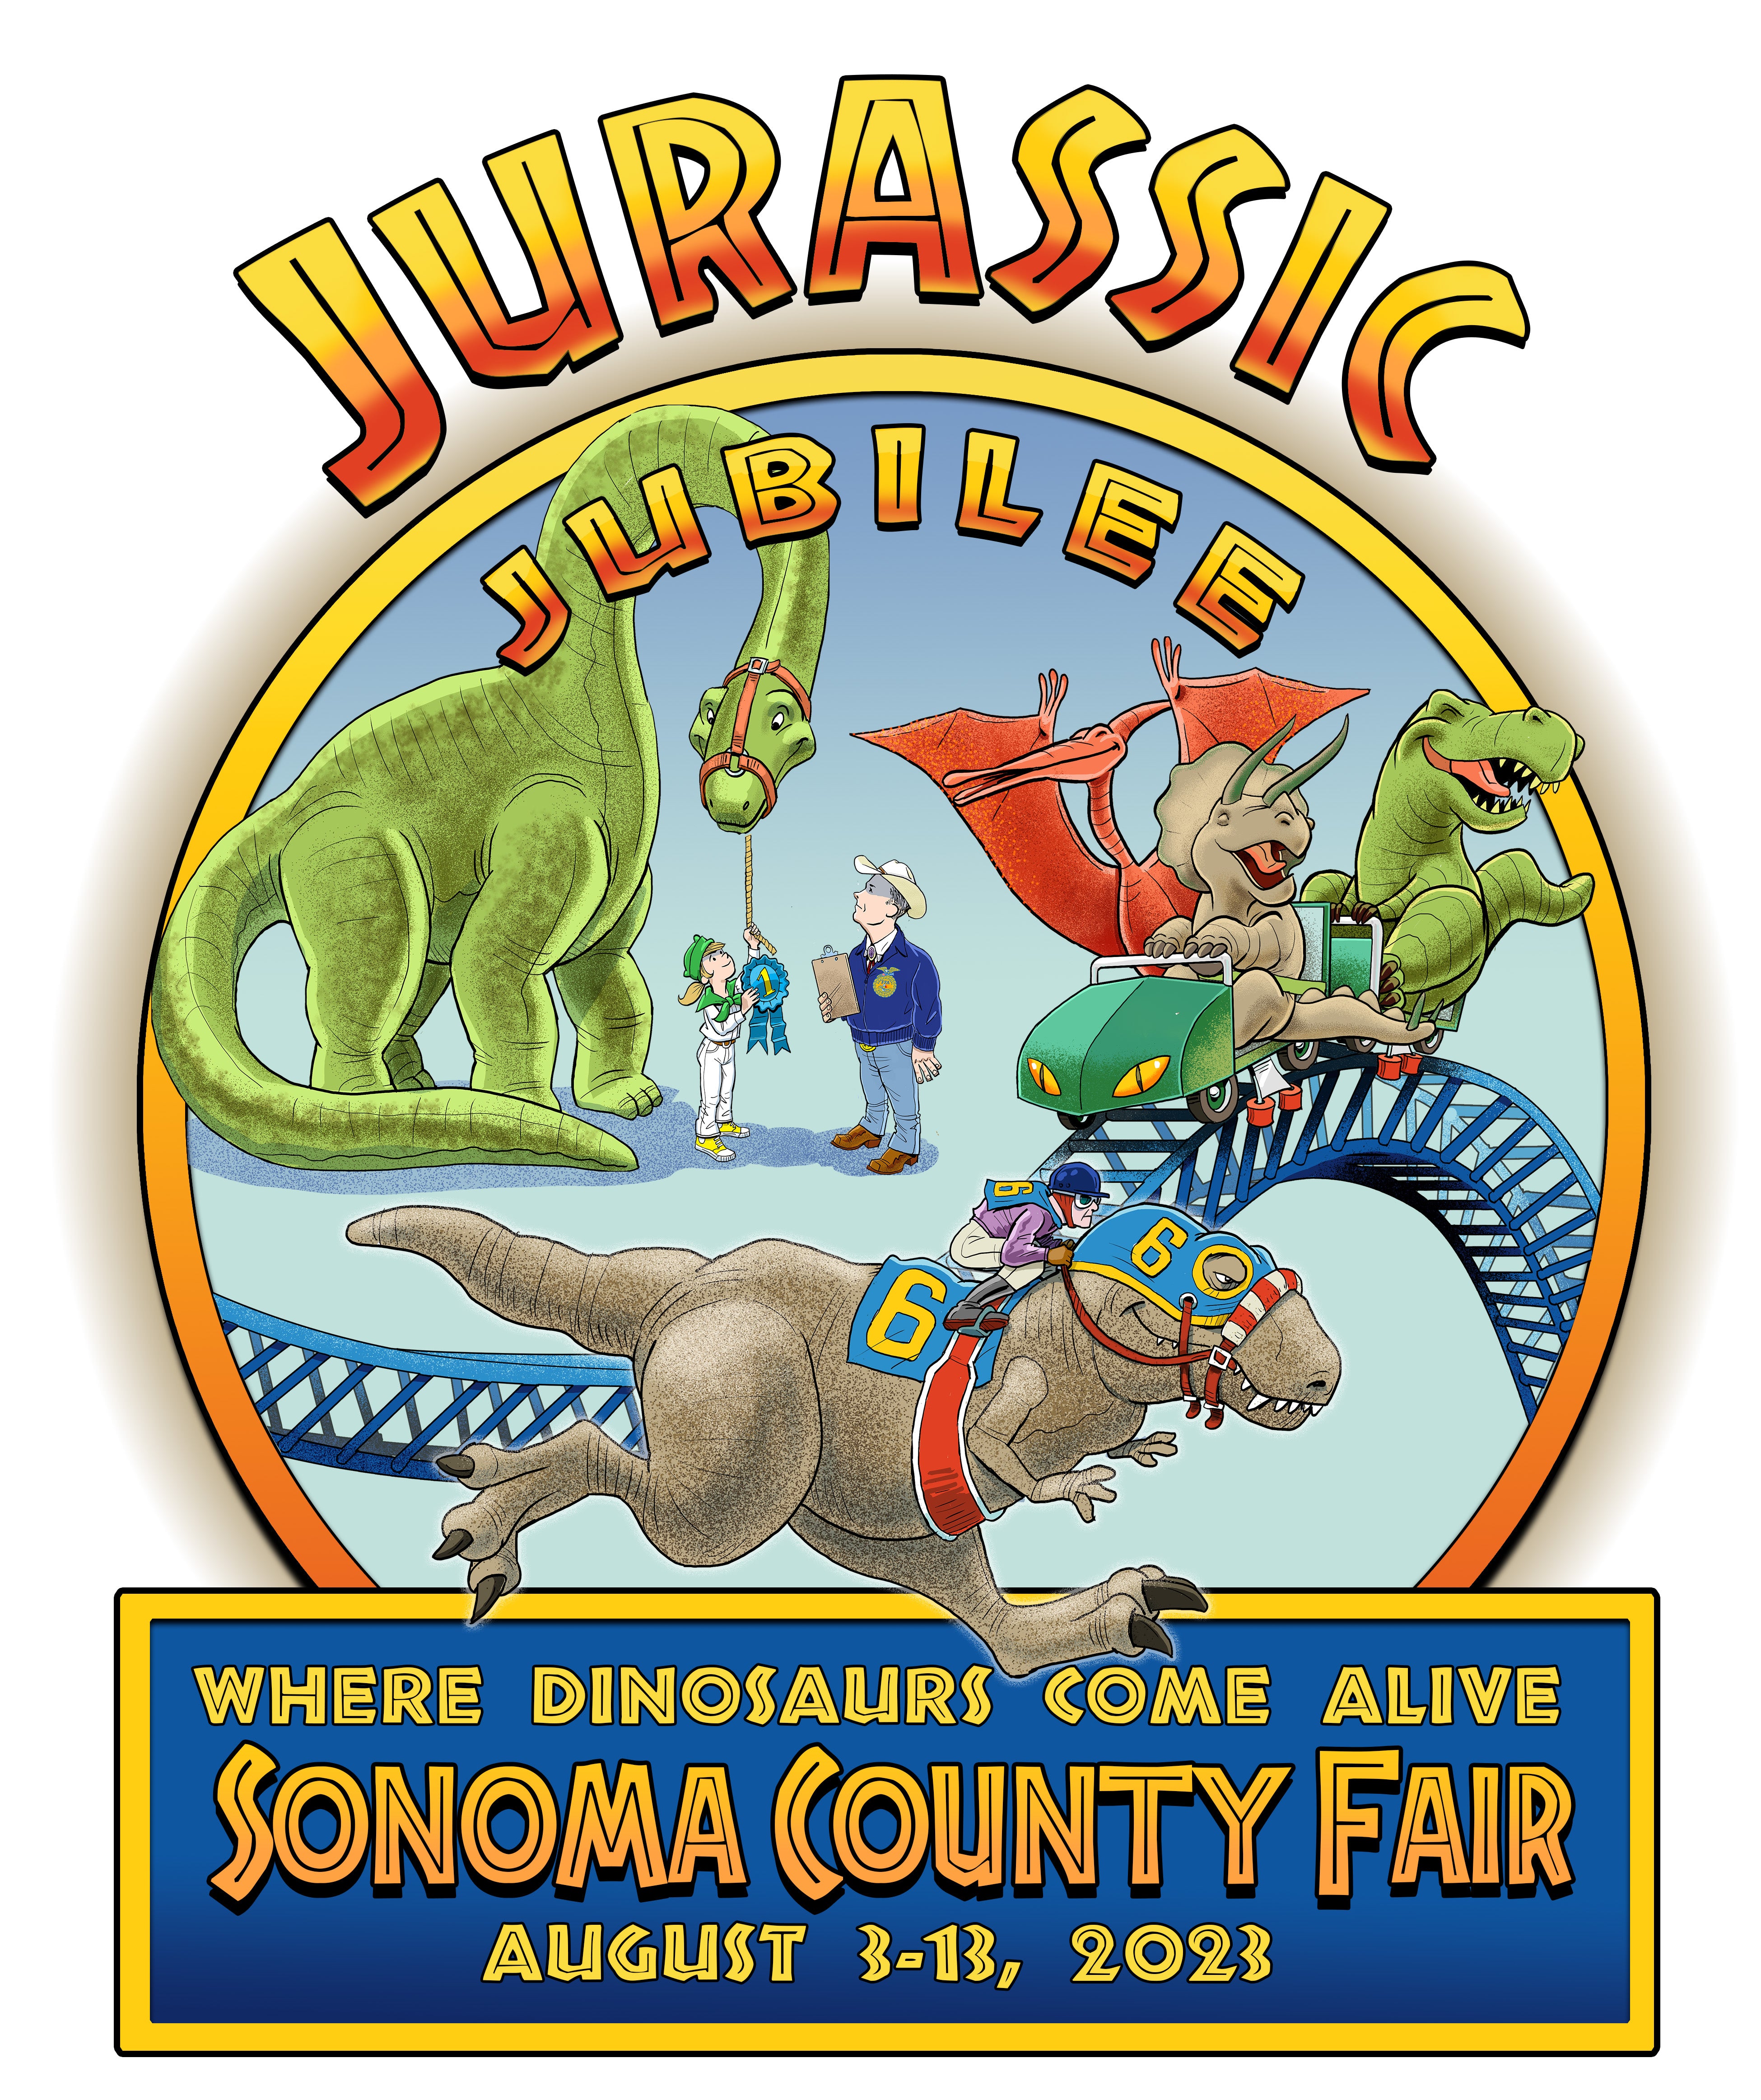 The Sonoma County Fair Announces Dates and Theme